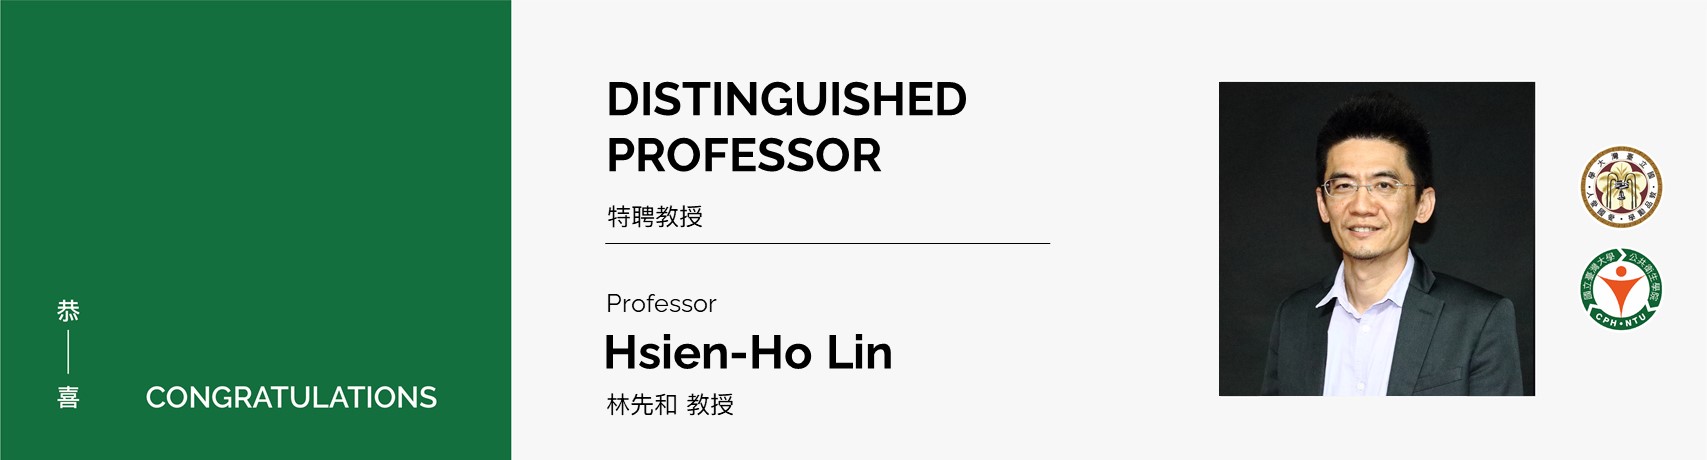 【Congratulations!】Professor Hsien-Ho Lin as the Distinguished Professor